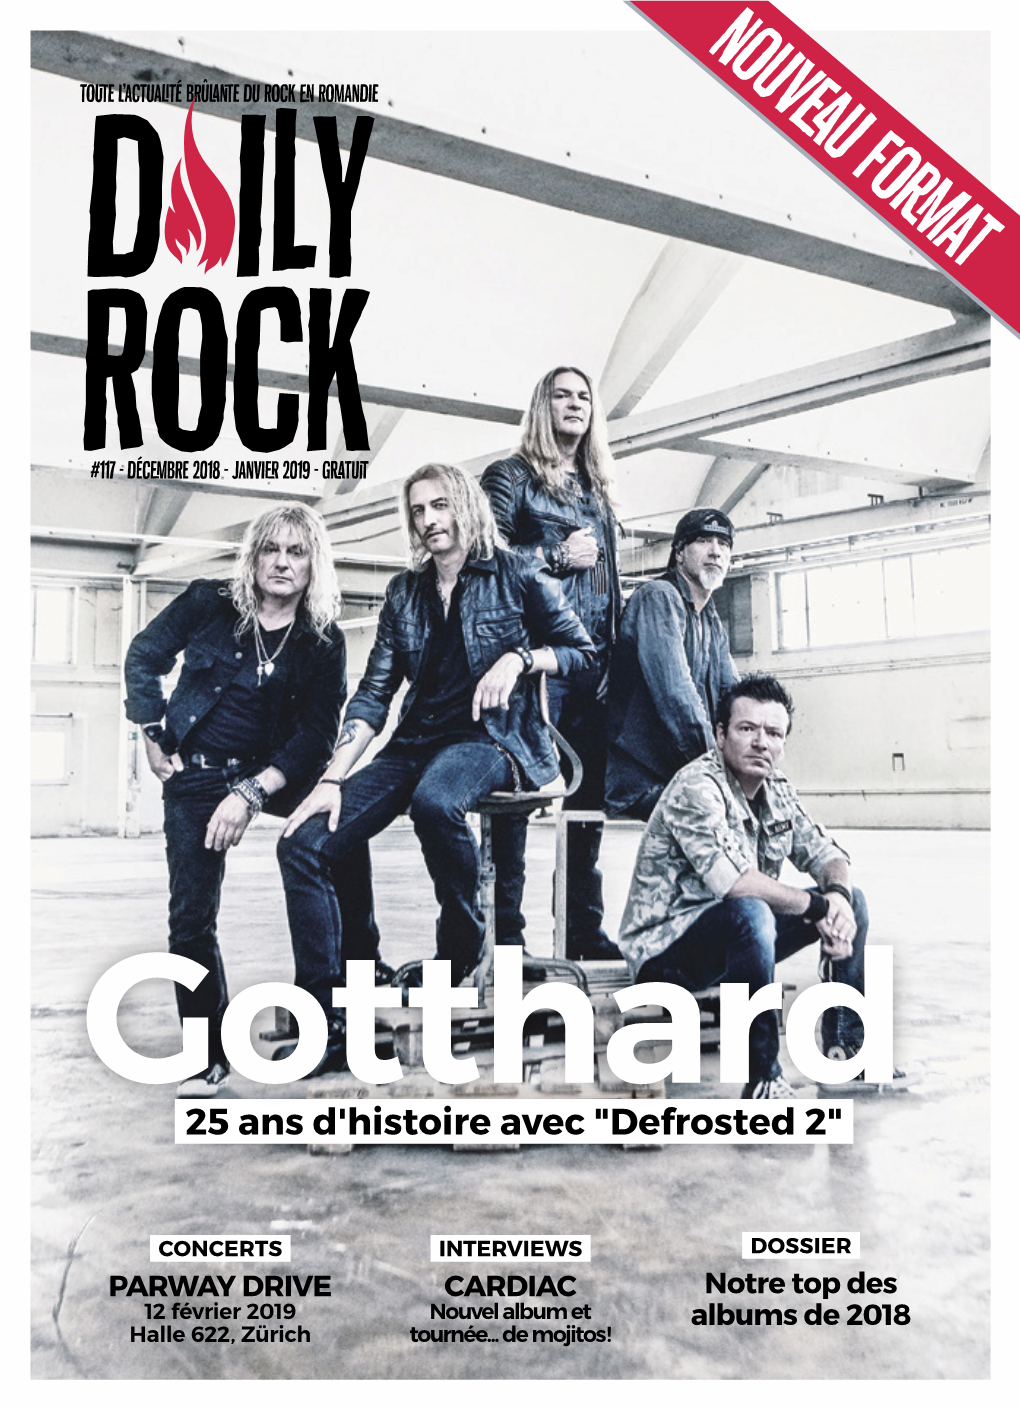 Gotthard 25 Ans D'histoire Avec "Defrosted 2"